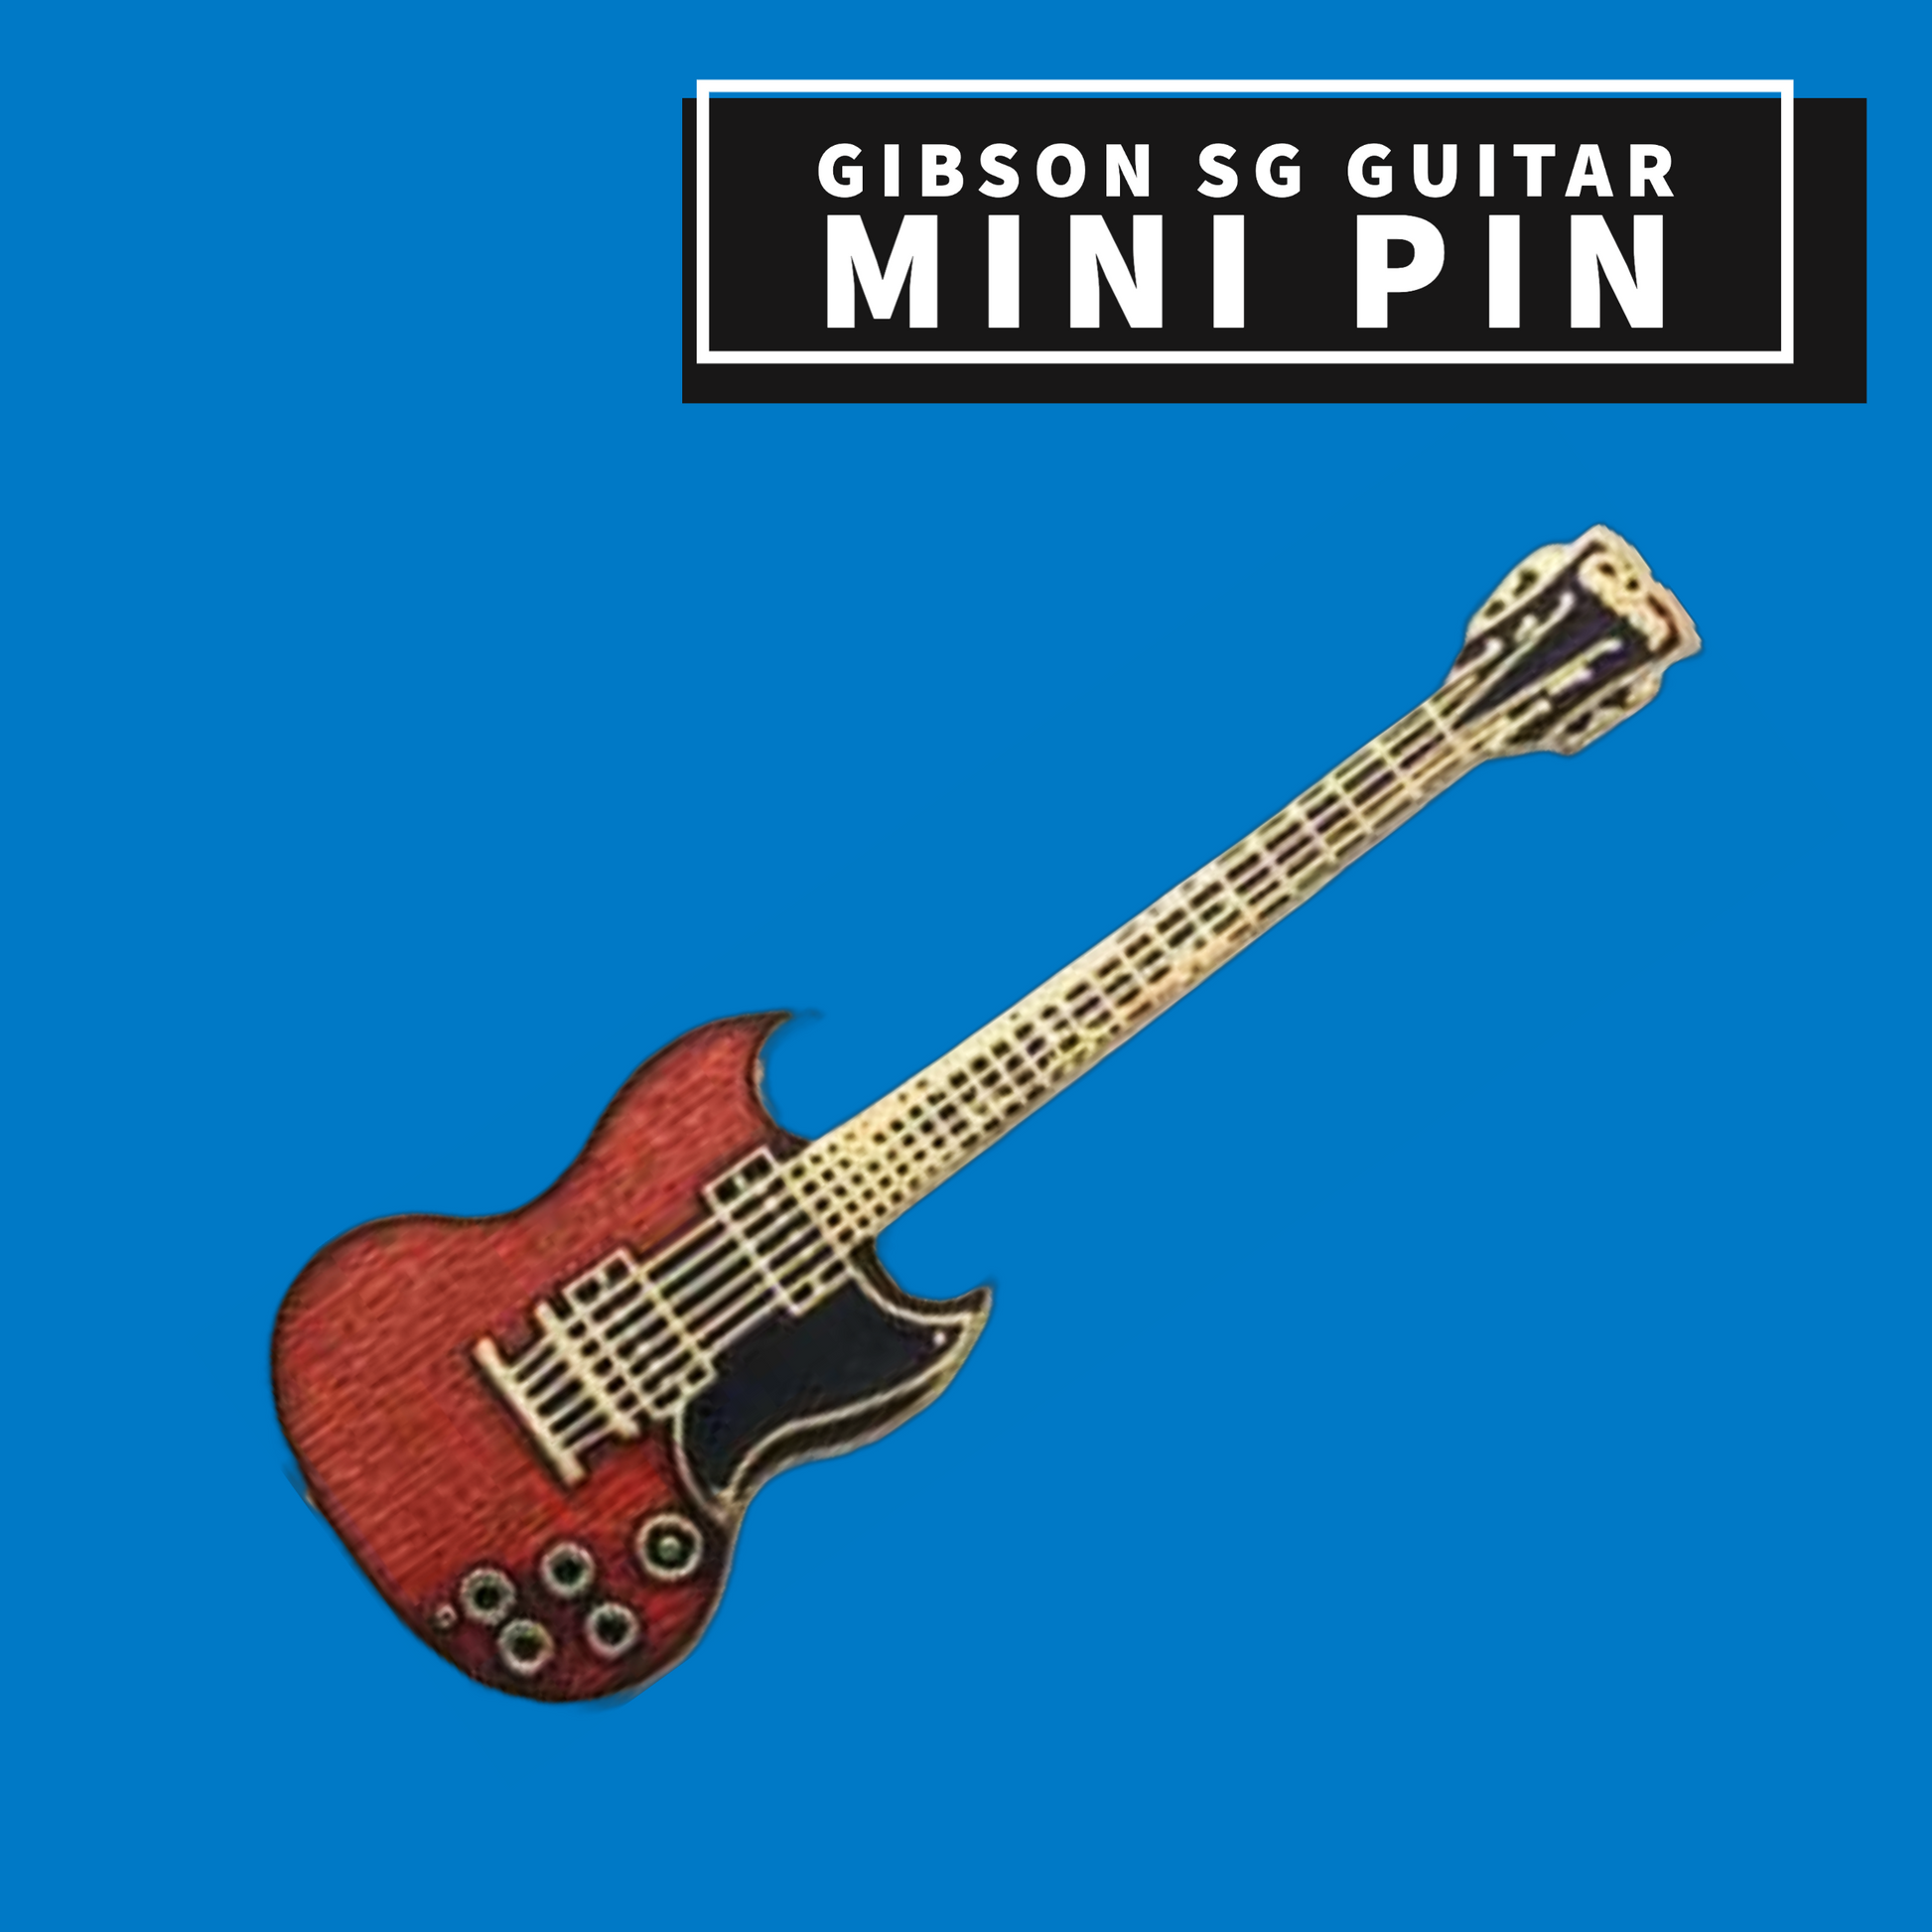 Red Gibson Sg Guitar Mini Pin Giftware